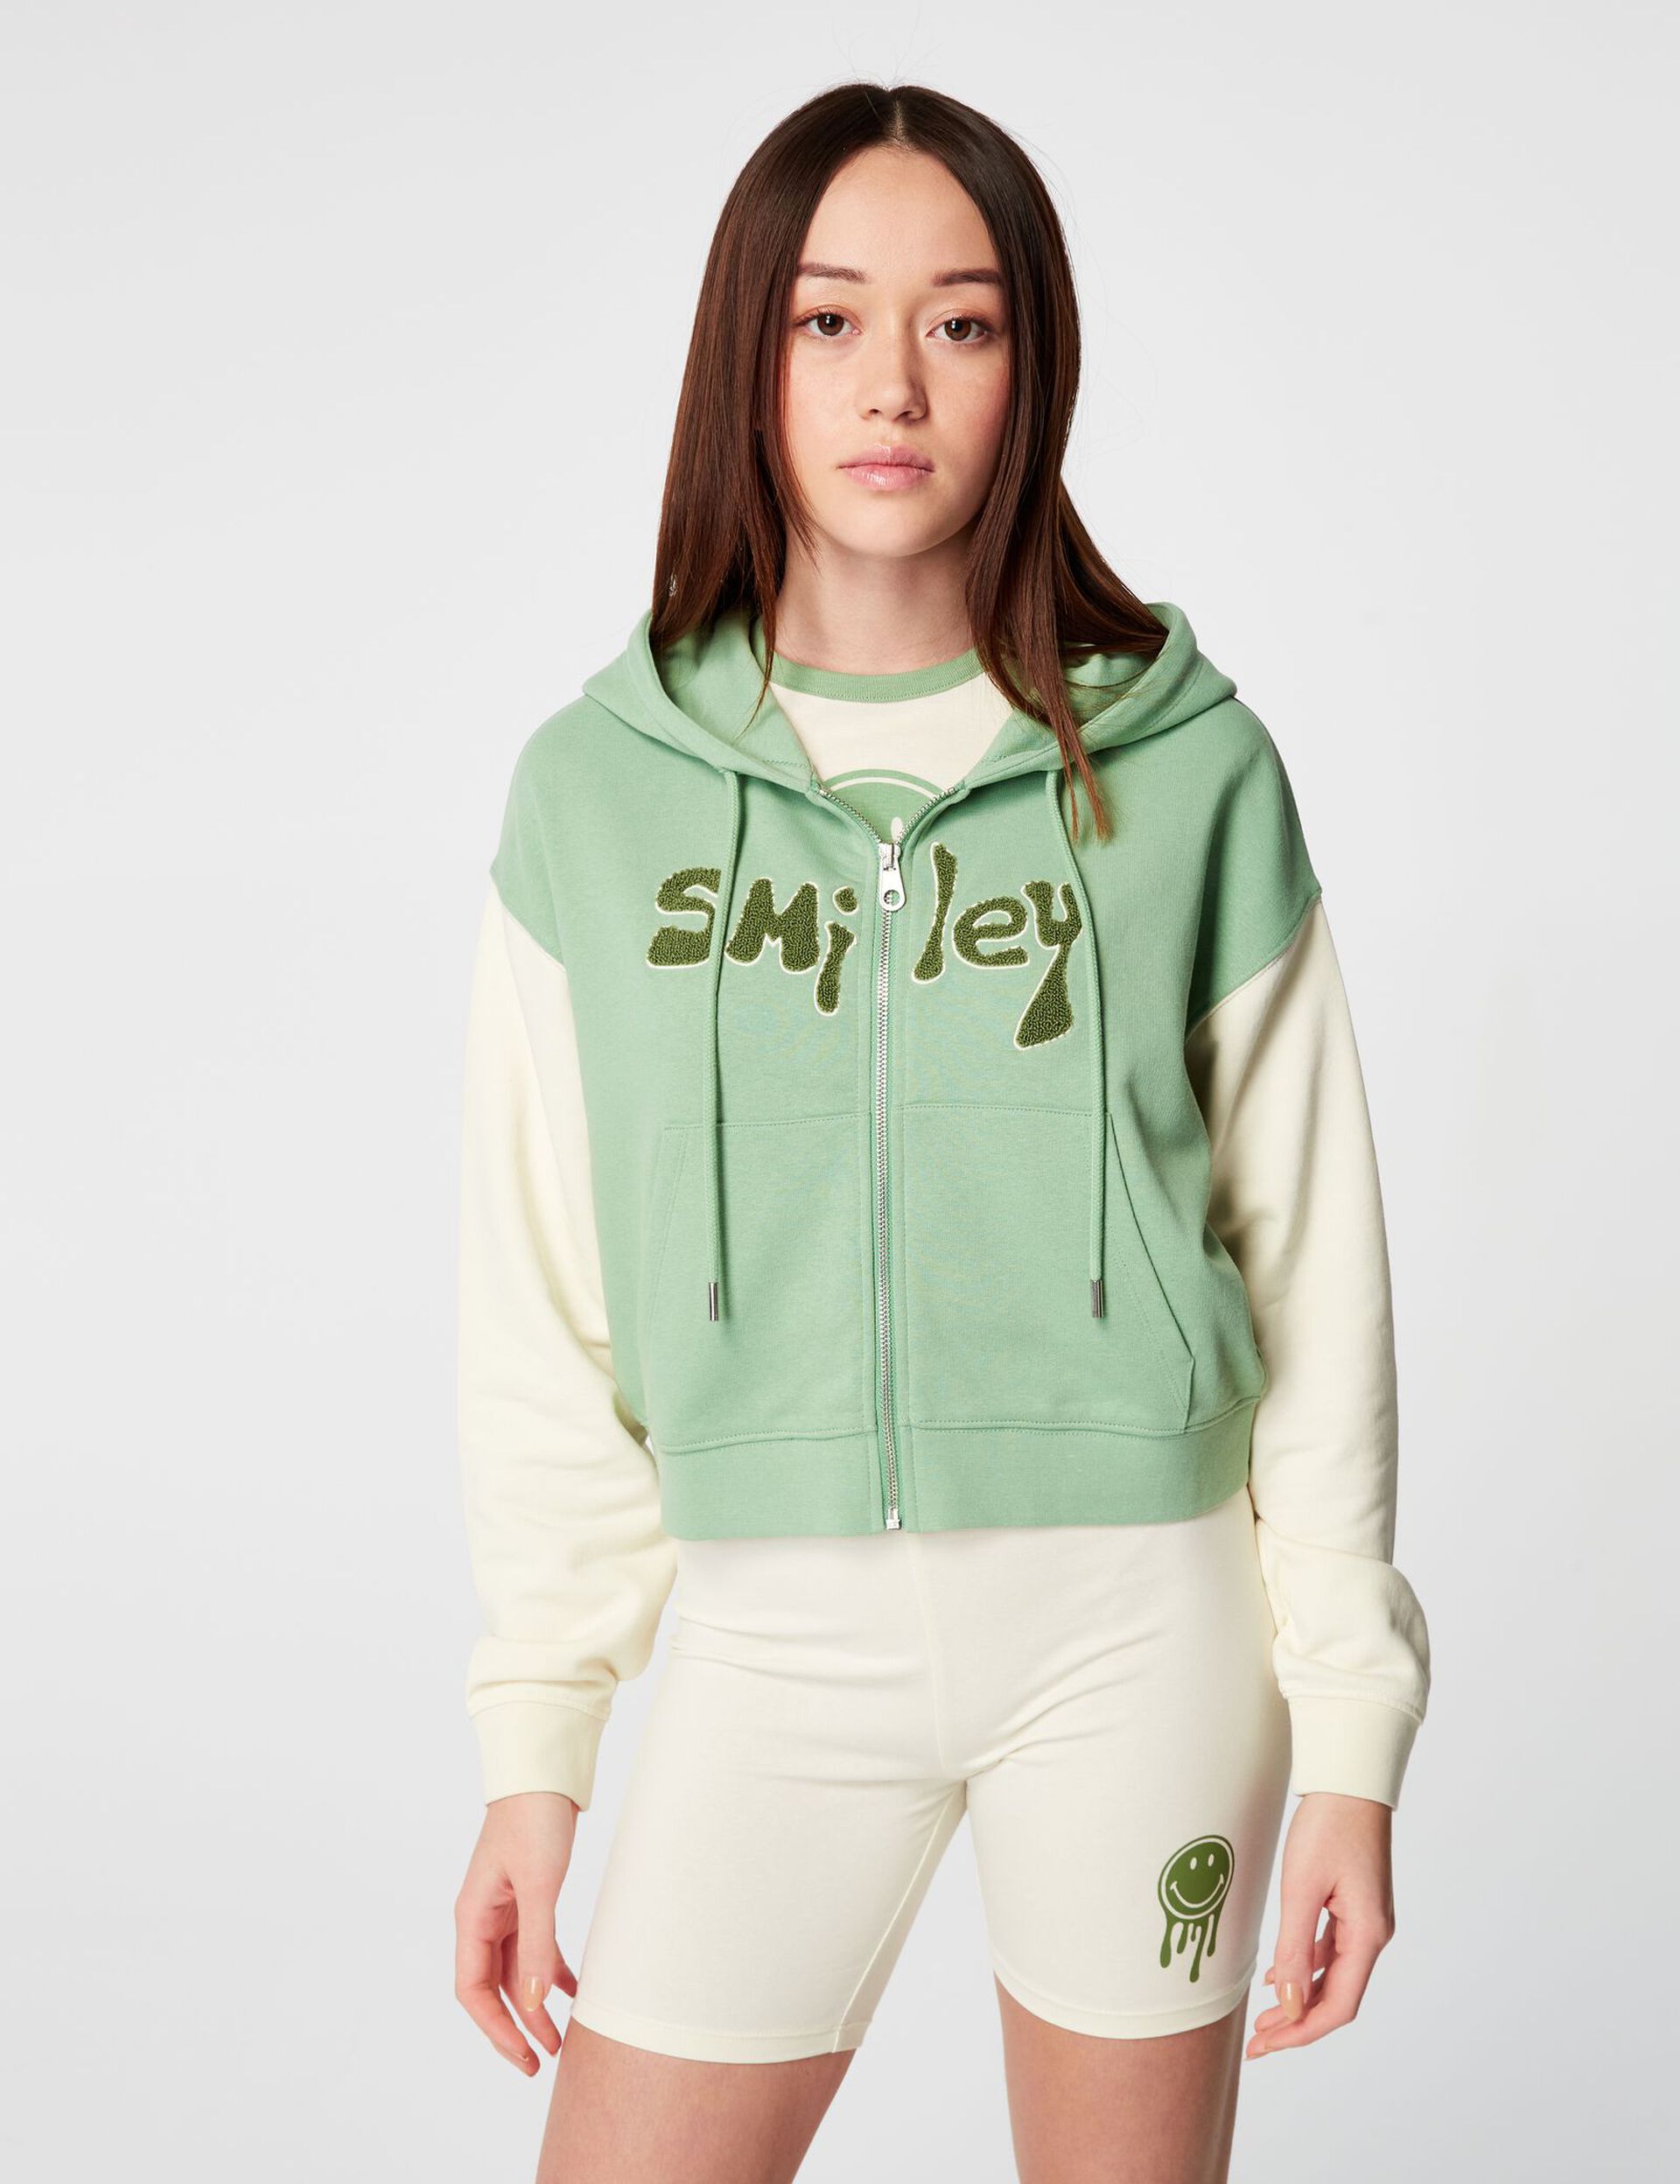 Smiley 2-tone zip-up sweatshirt